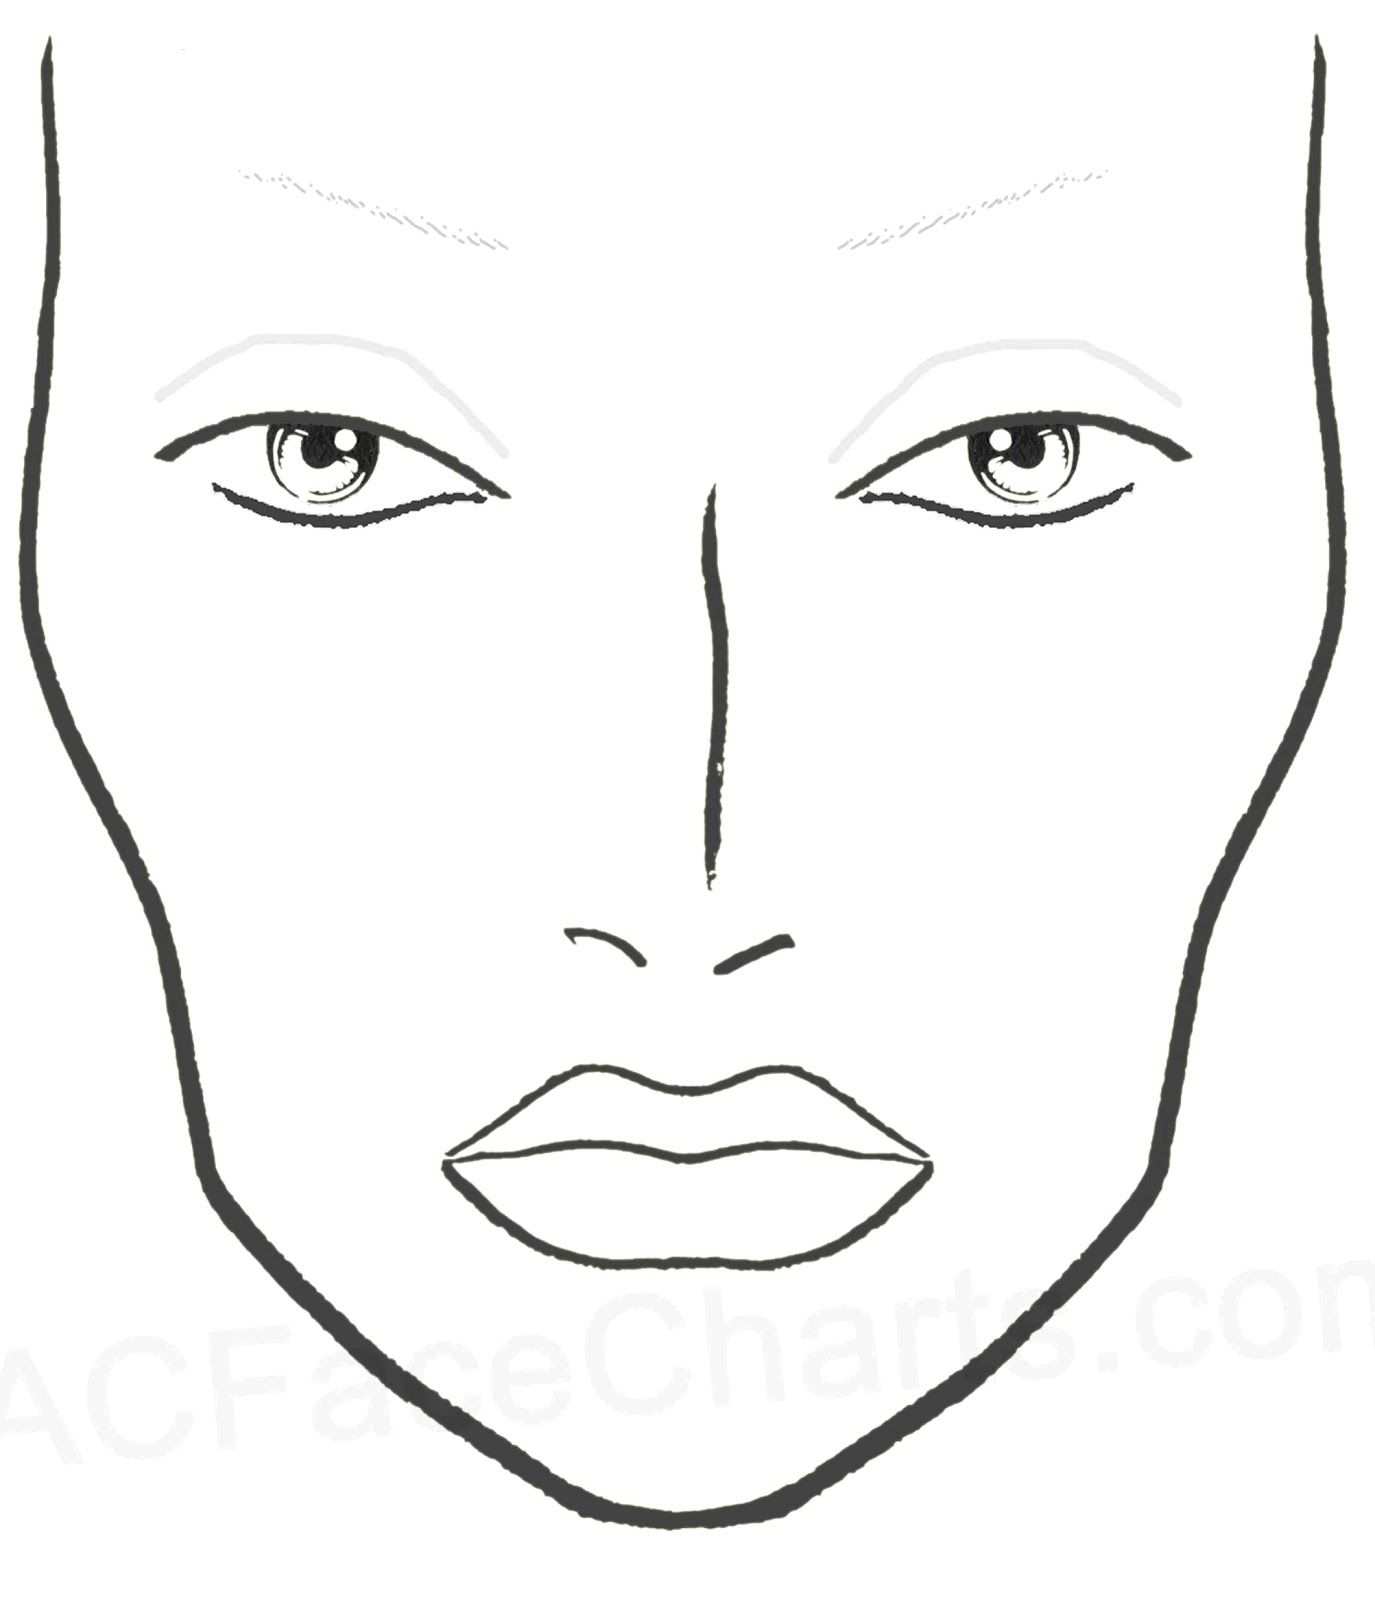 Blank Mac Face Charts Printable Sketch Coloring Page Makeup Face Charts Makeup Charts Mac Face Charts